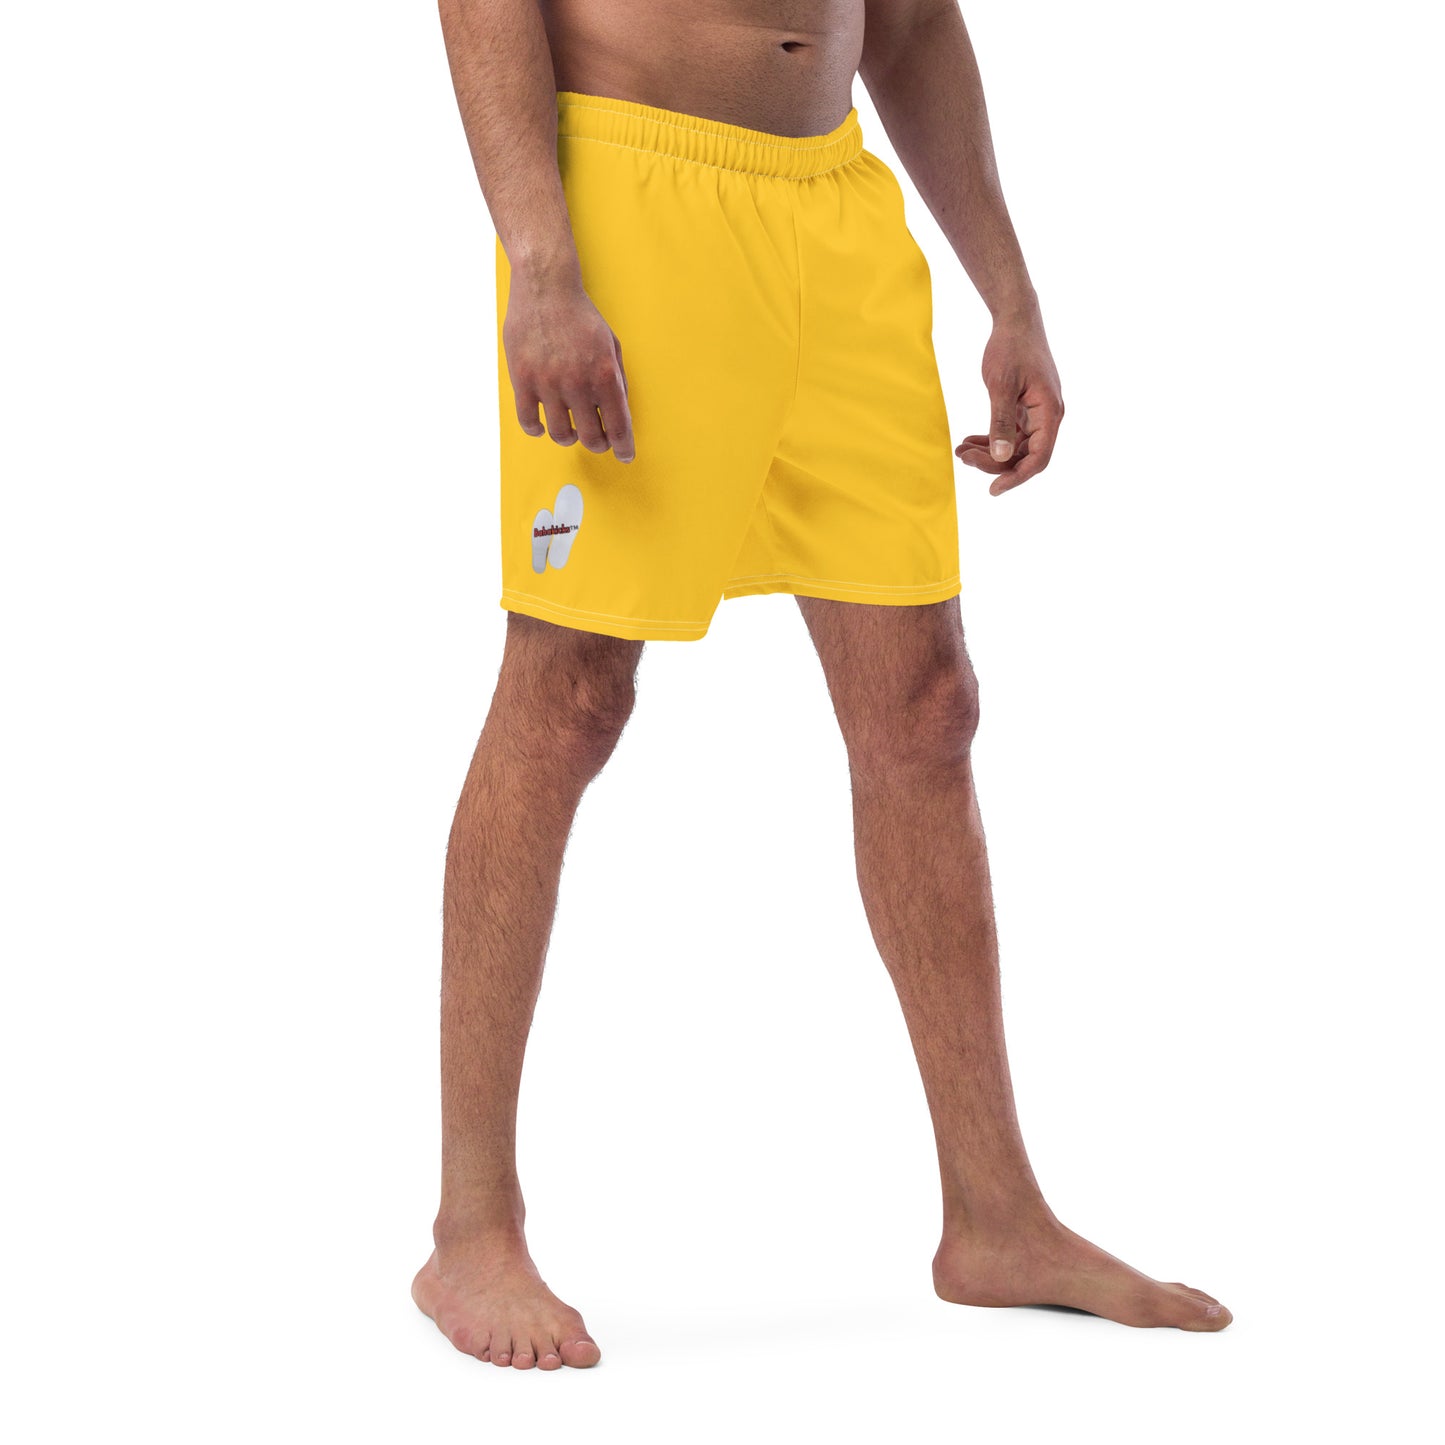 True Yellow Swim Trunks by Bahakicks™